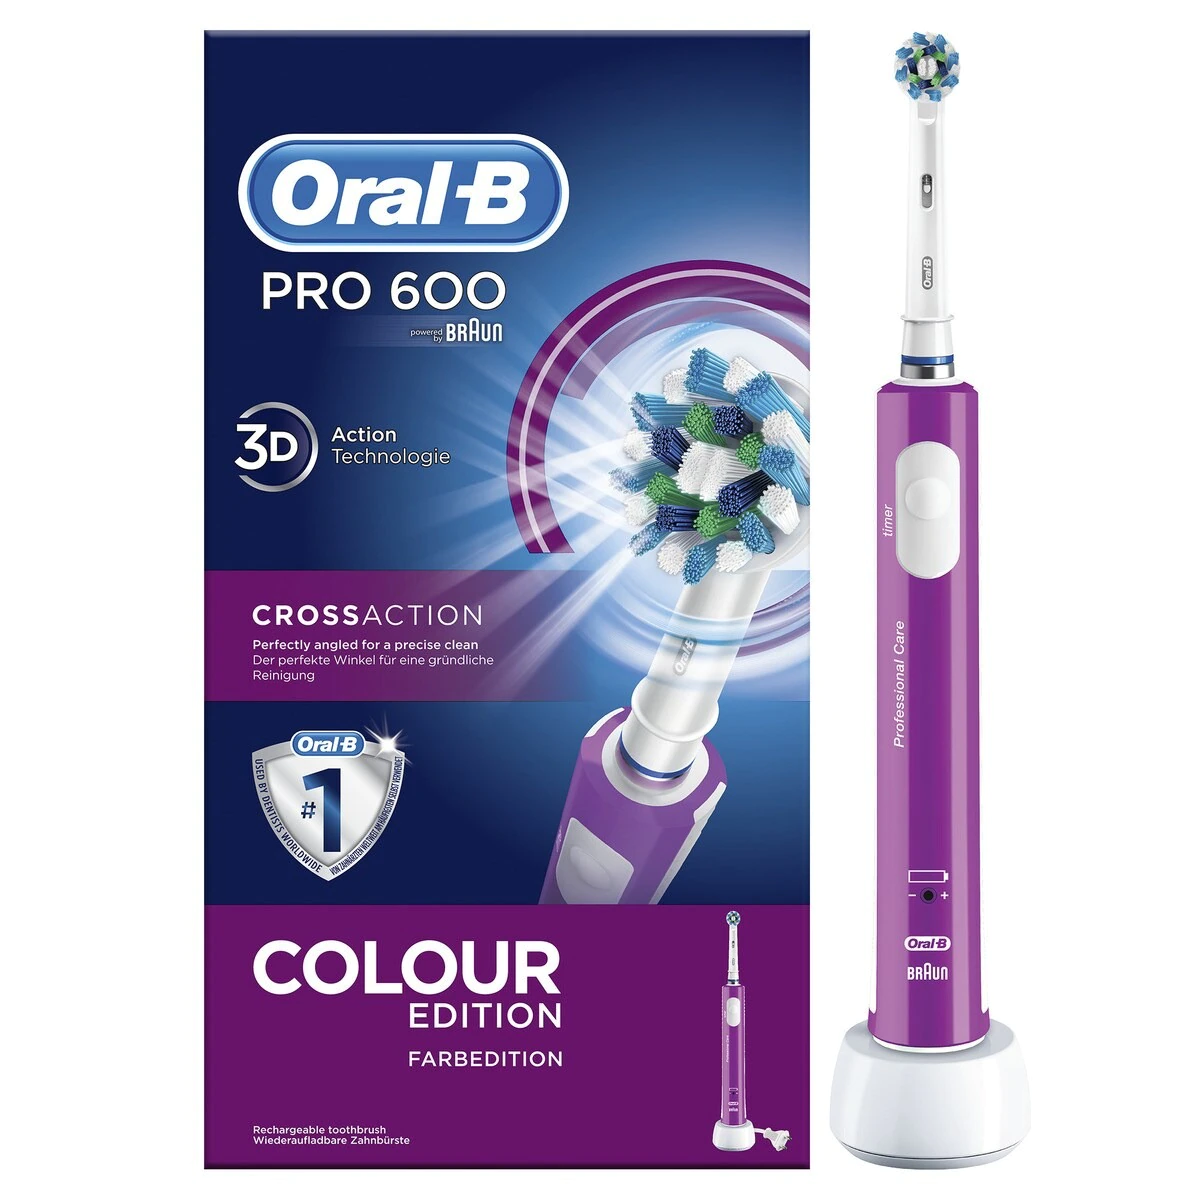 Cepillo de dientes eléctrico Braun Oral-B PRO 600 con cabezal CrossAction